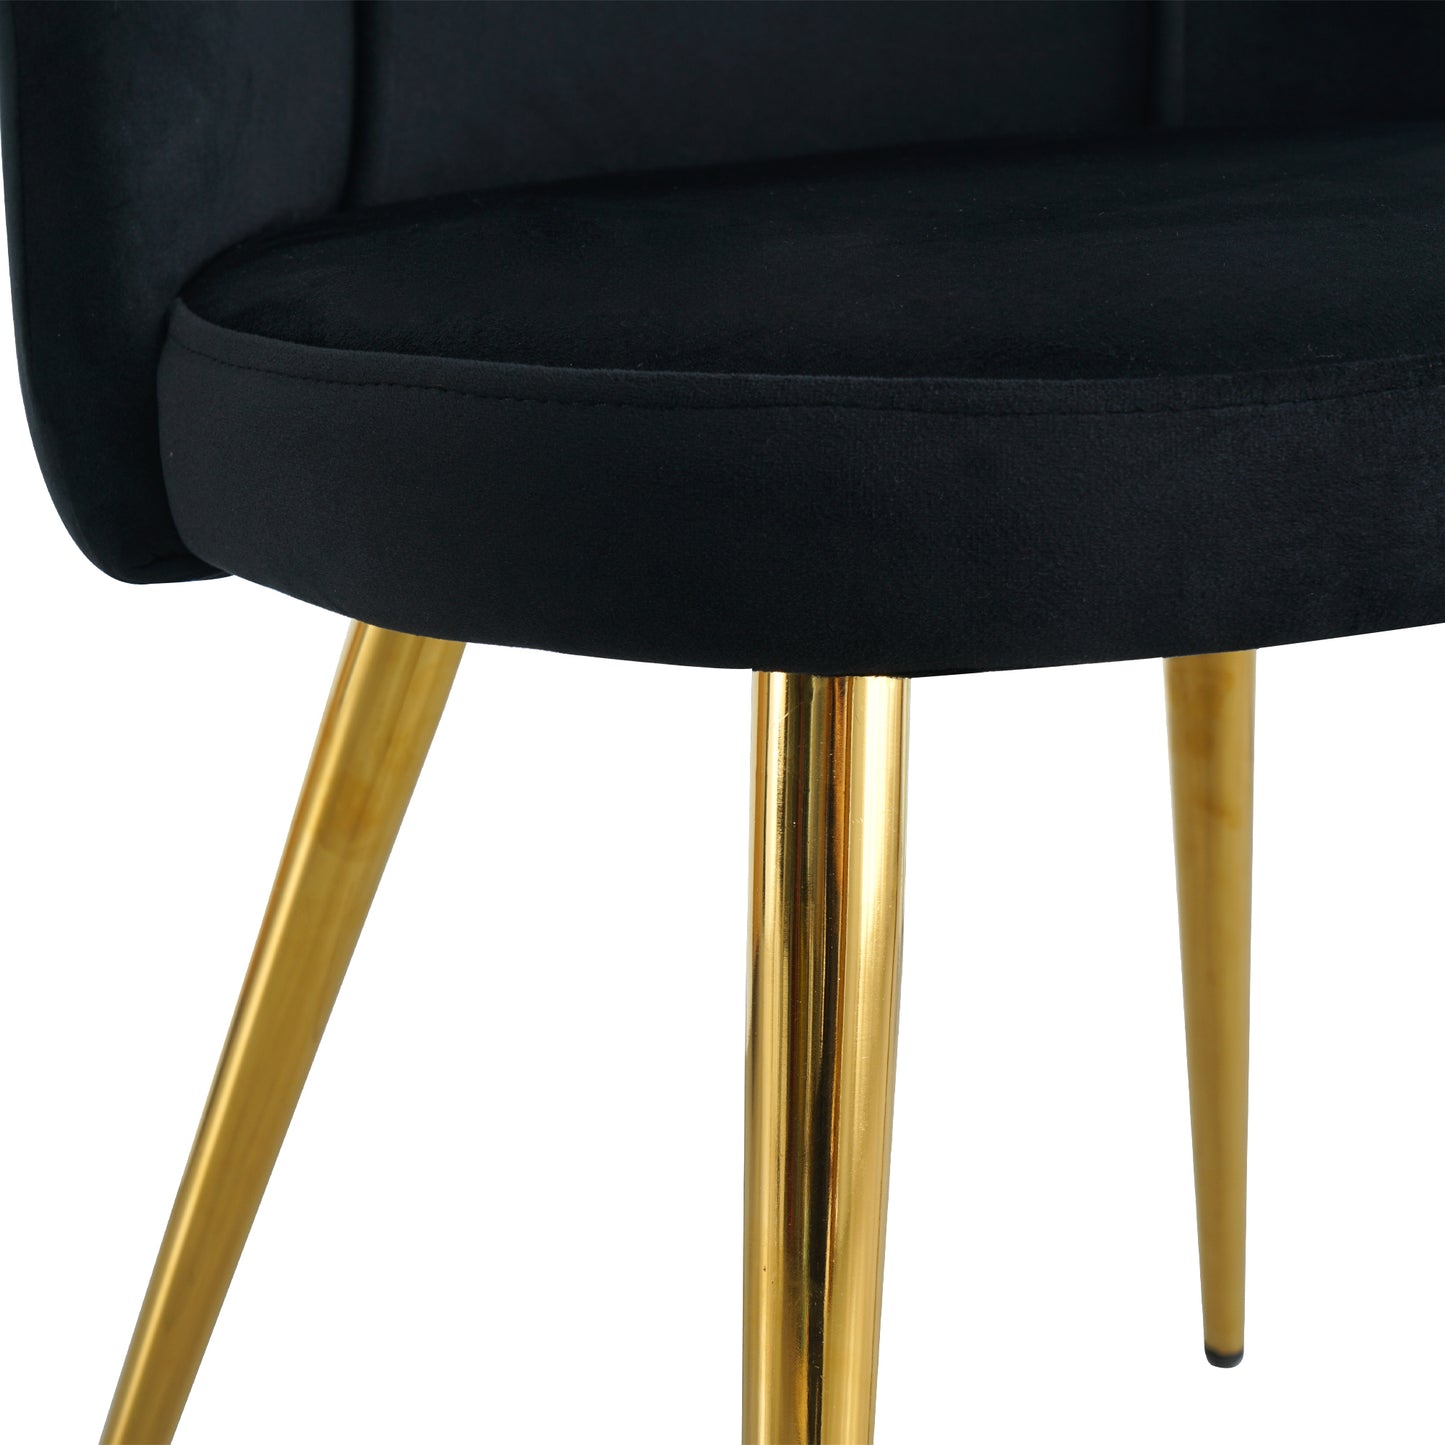 Modern simple velvet dining black chair home bedroom stool back dressing chair student desk chair gold metal legs(set of 4)